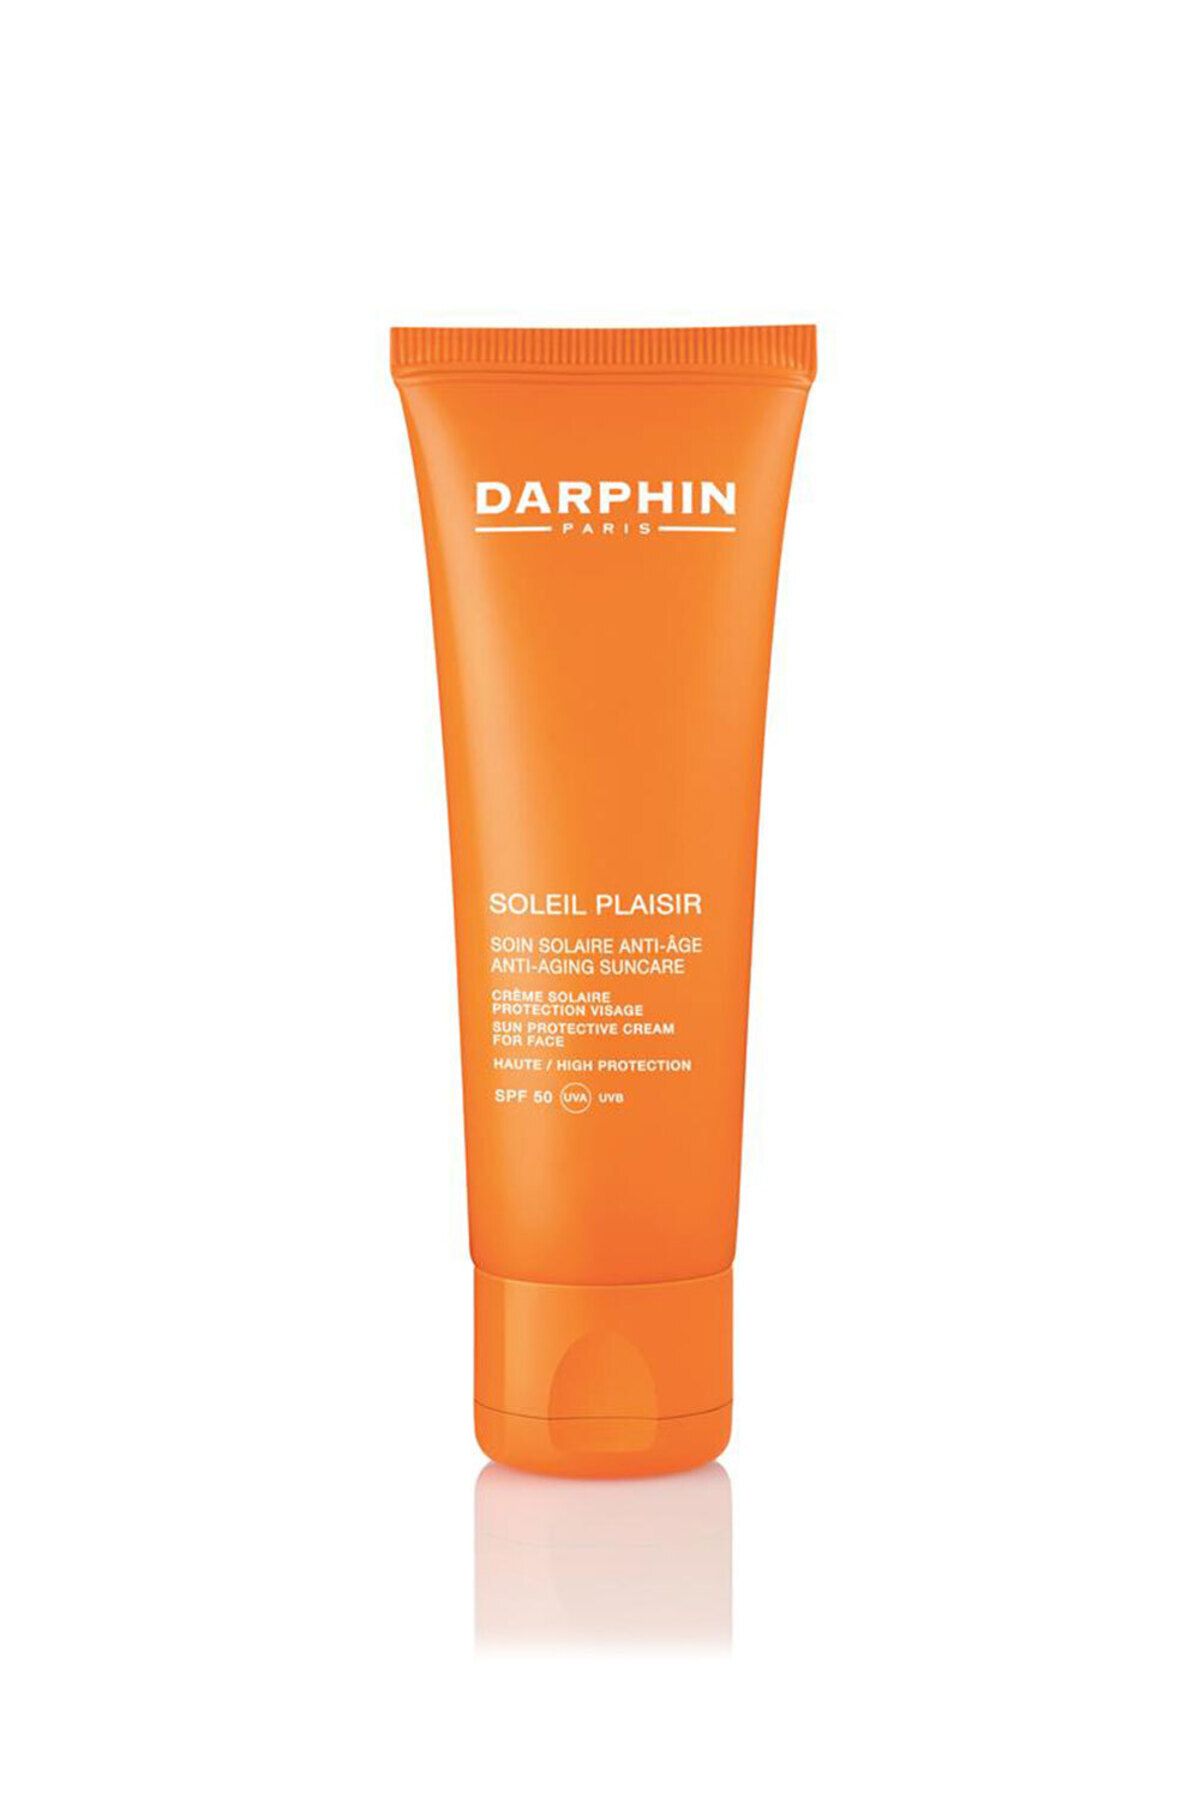 Darphin Soleil Plaisir Sun Moisturizing and Caring Sunscreen Cream Spf50 50ml SHİNEE235